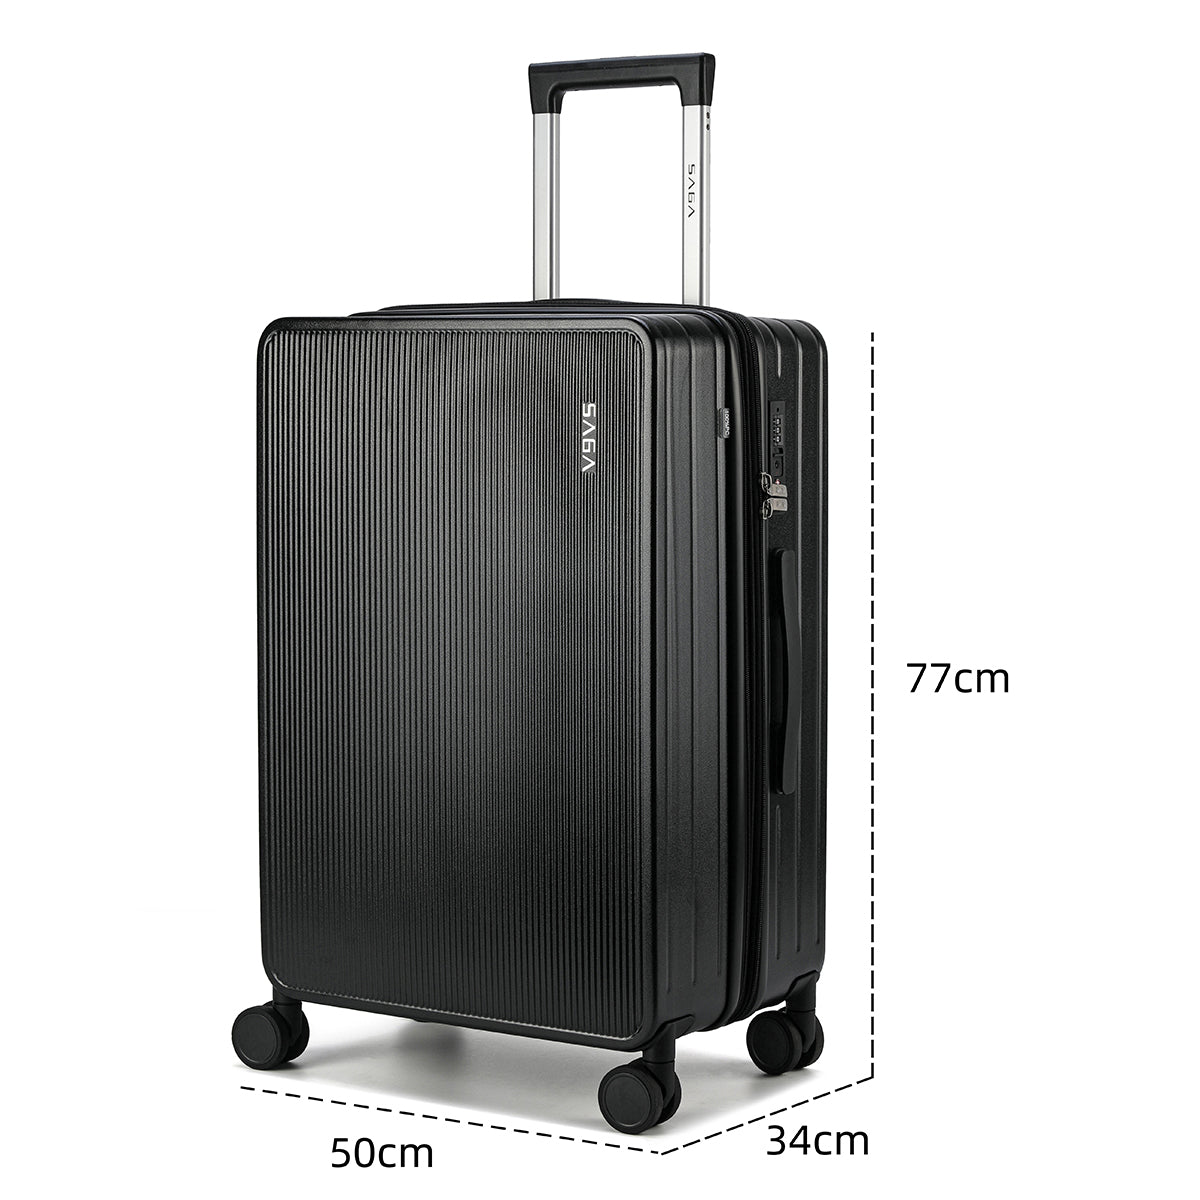 Luxurious polycarbonate travel bags, black color, different sizes